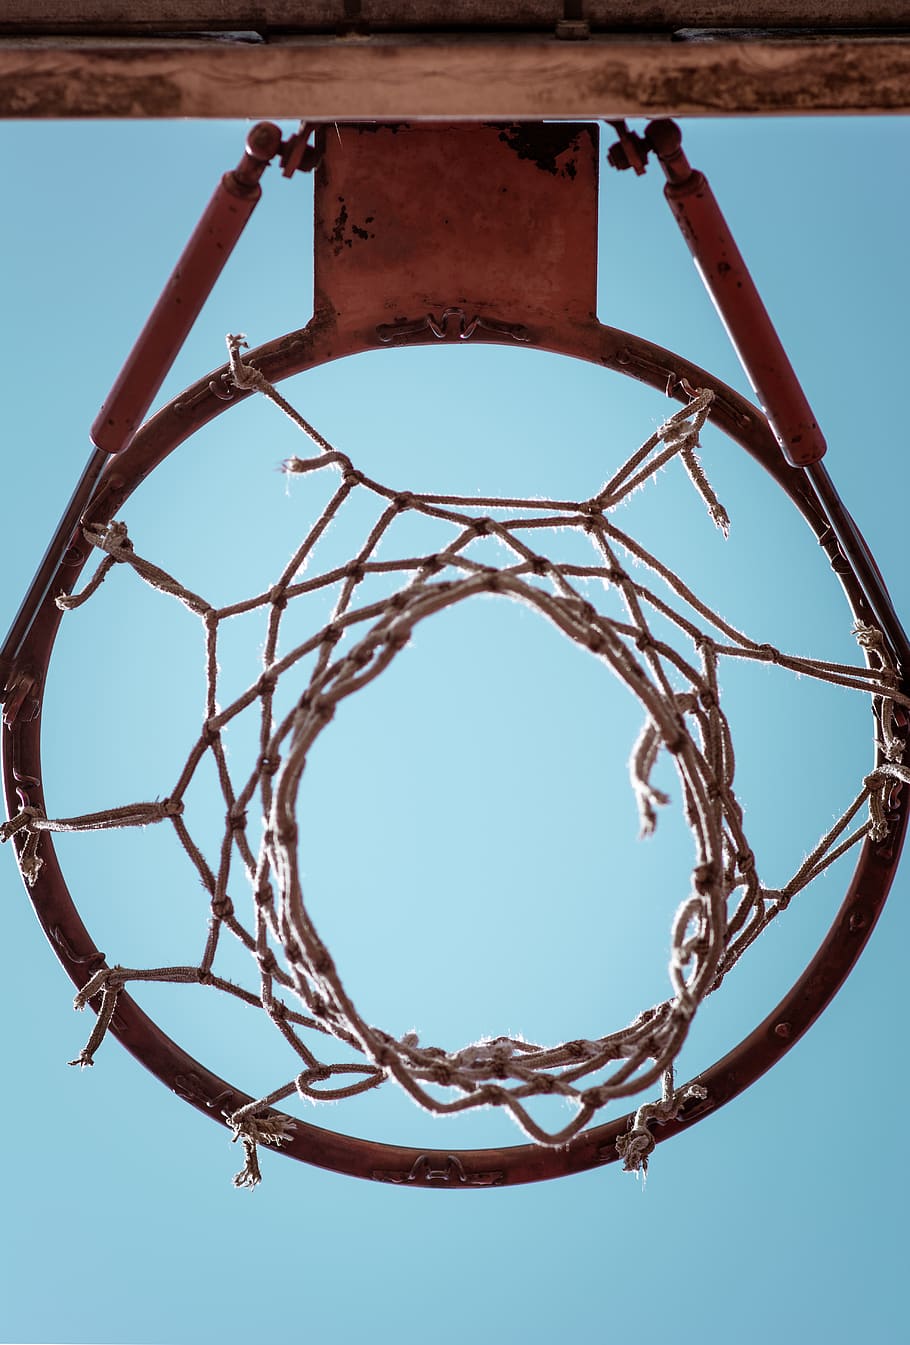 HD wallpaper: brown metal basketball rim under blue sky, karlsruhe, germany - Wallpaper Flare